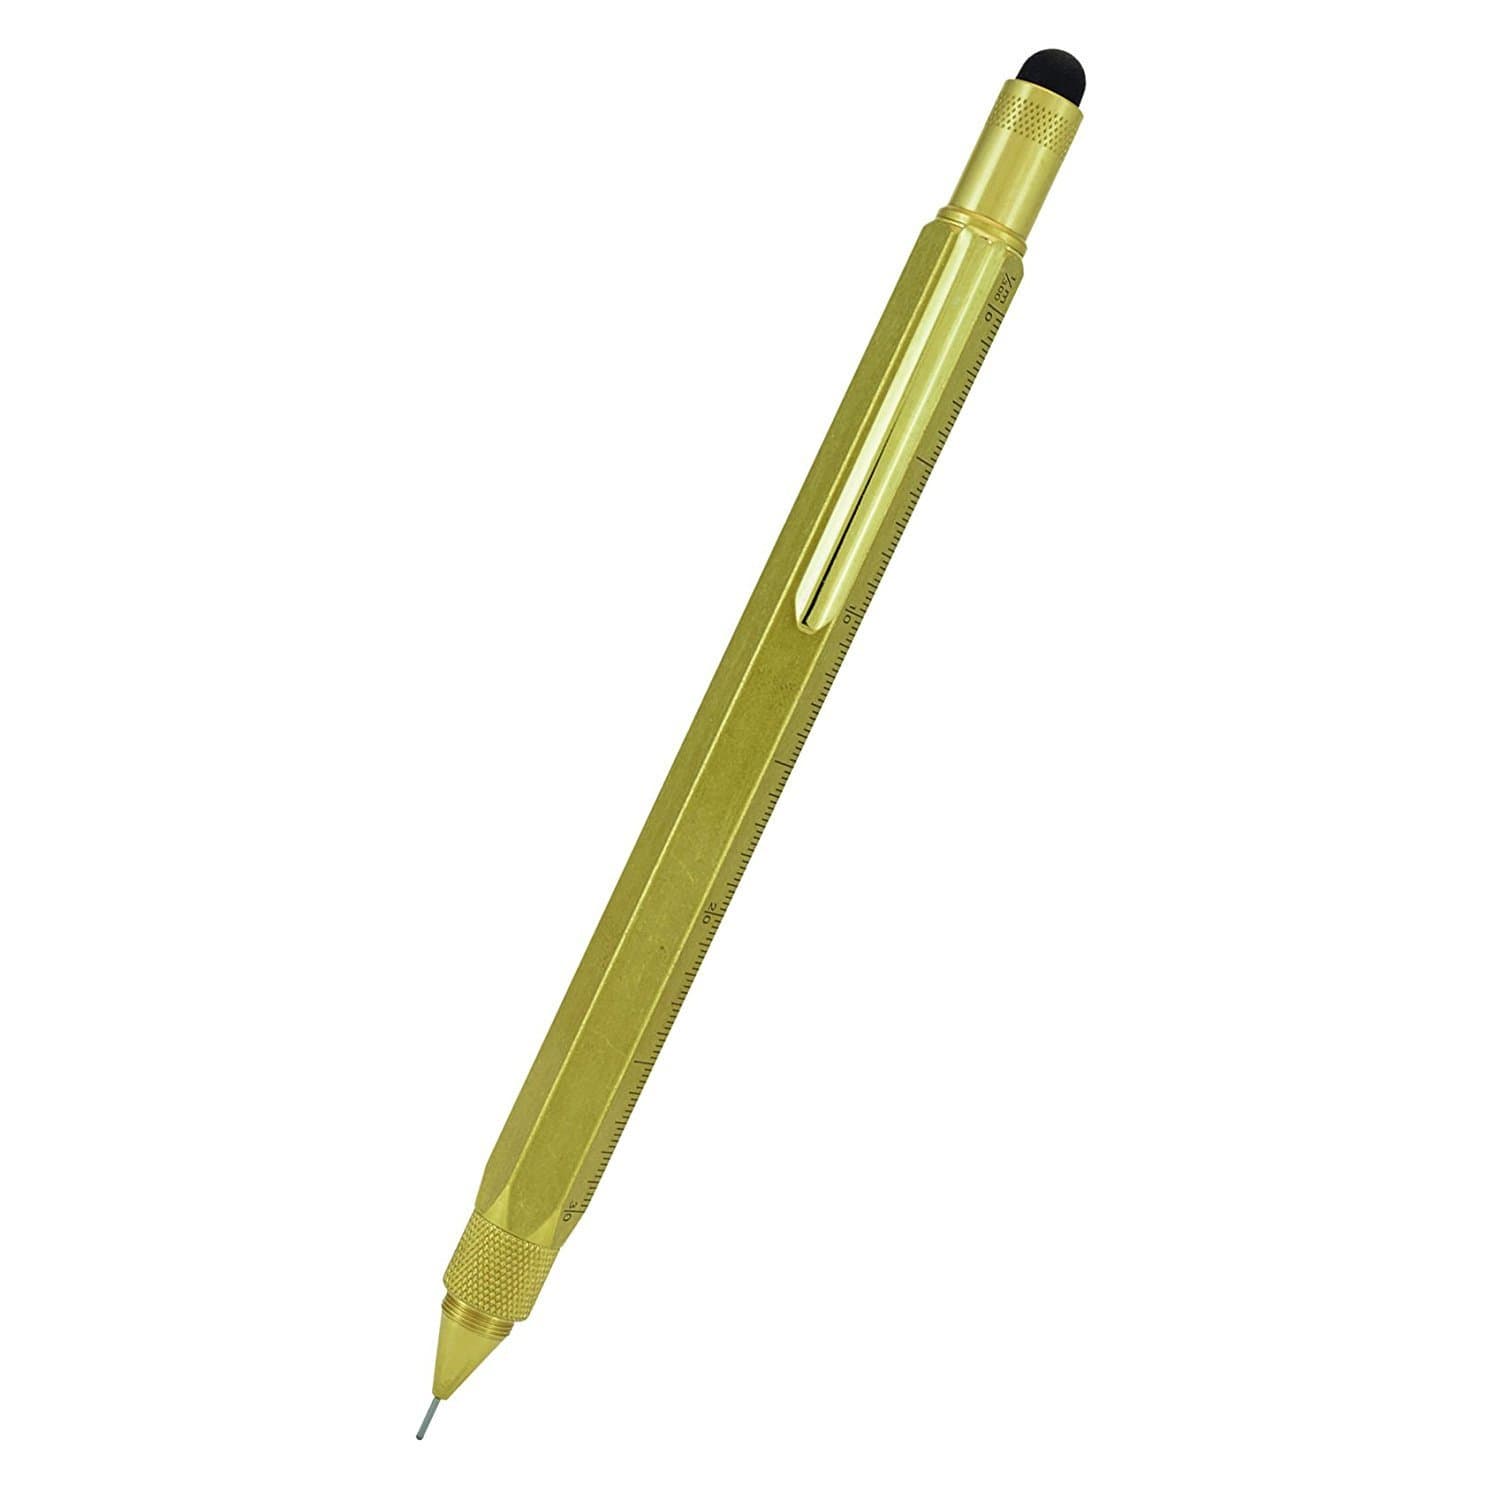 Monteverde One Touch Stylus Tool Fountain Pen in Rainbow - Goldspot Pens